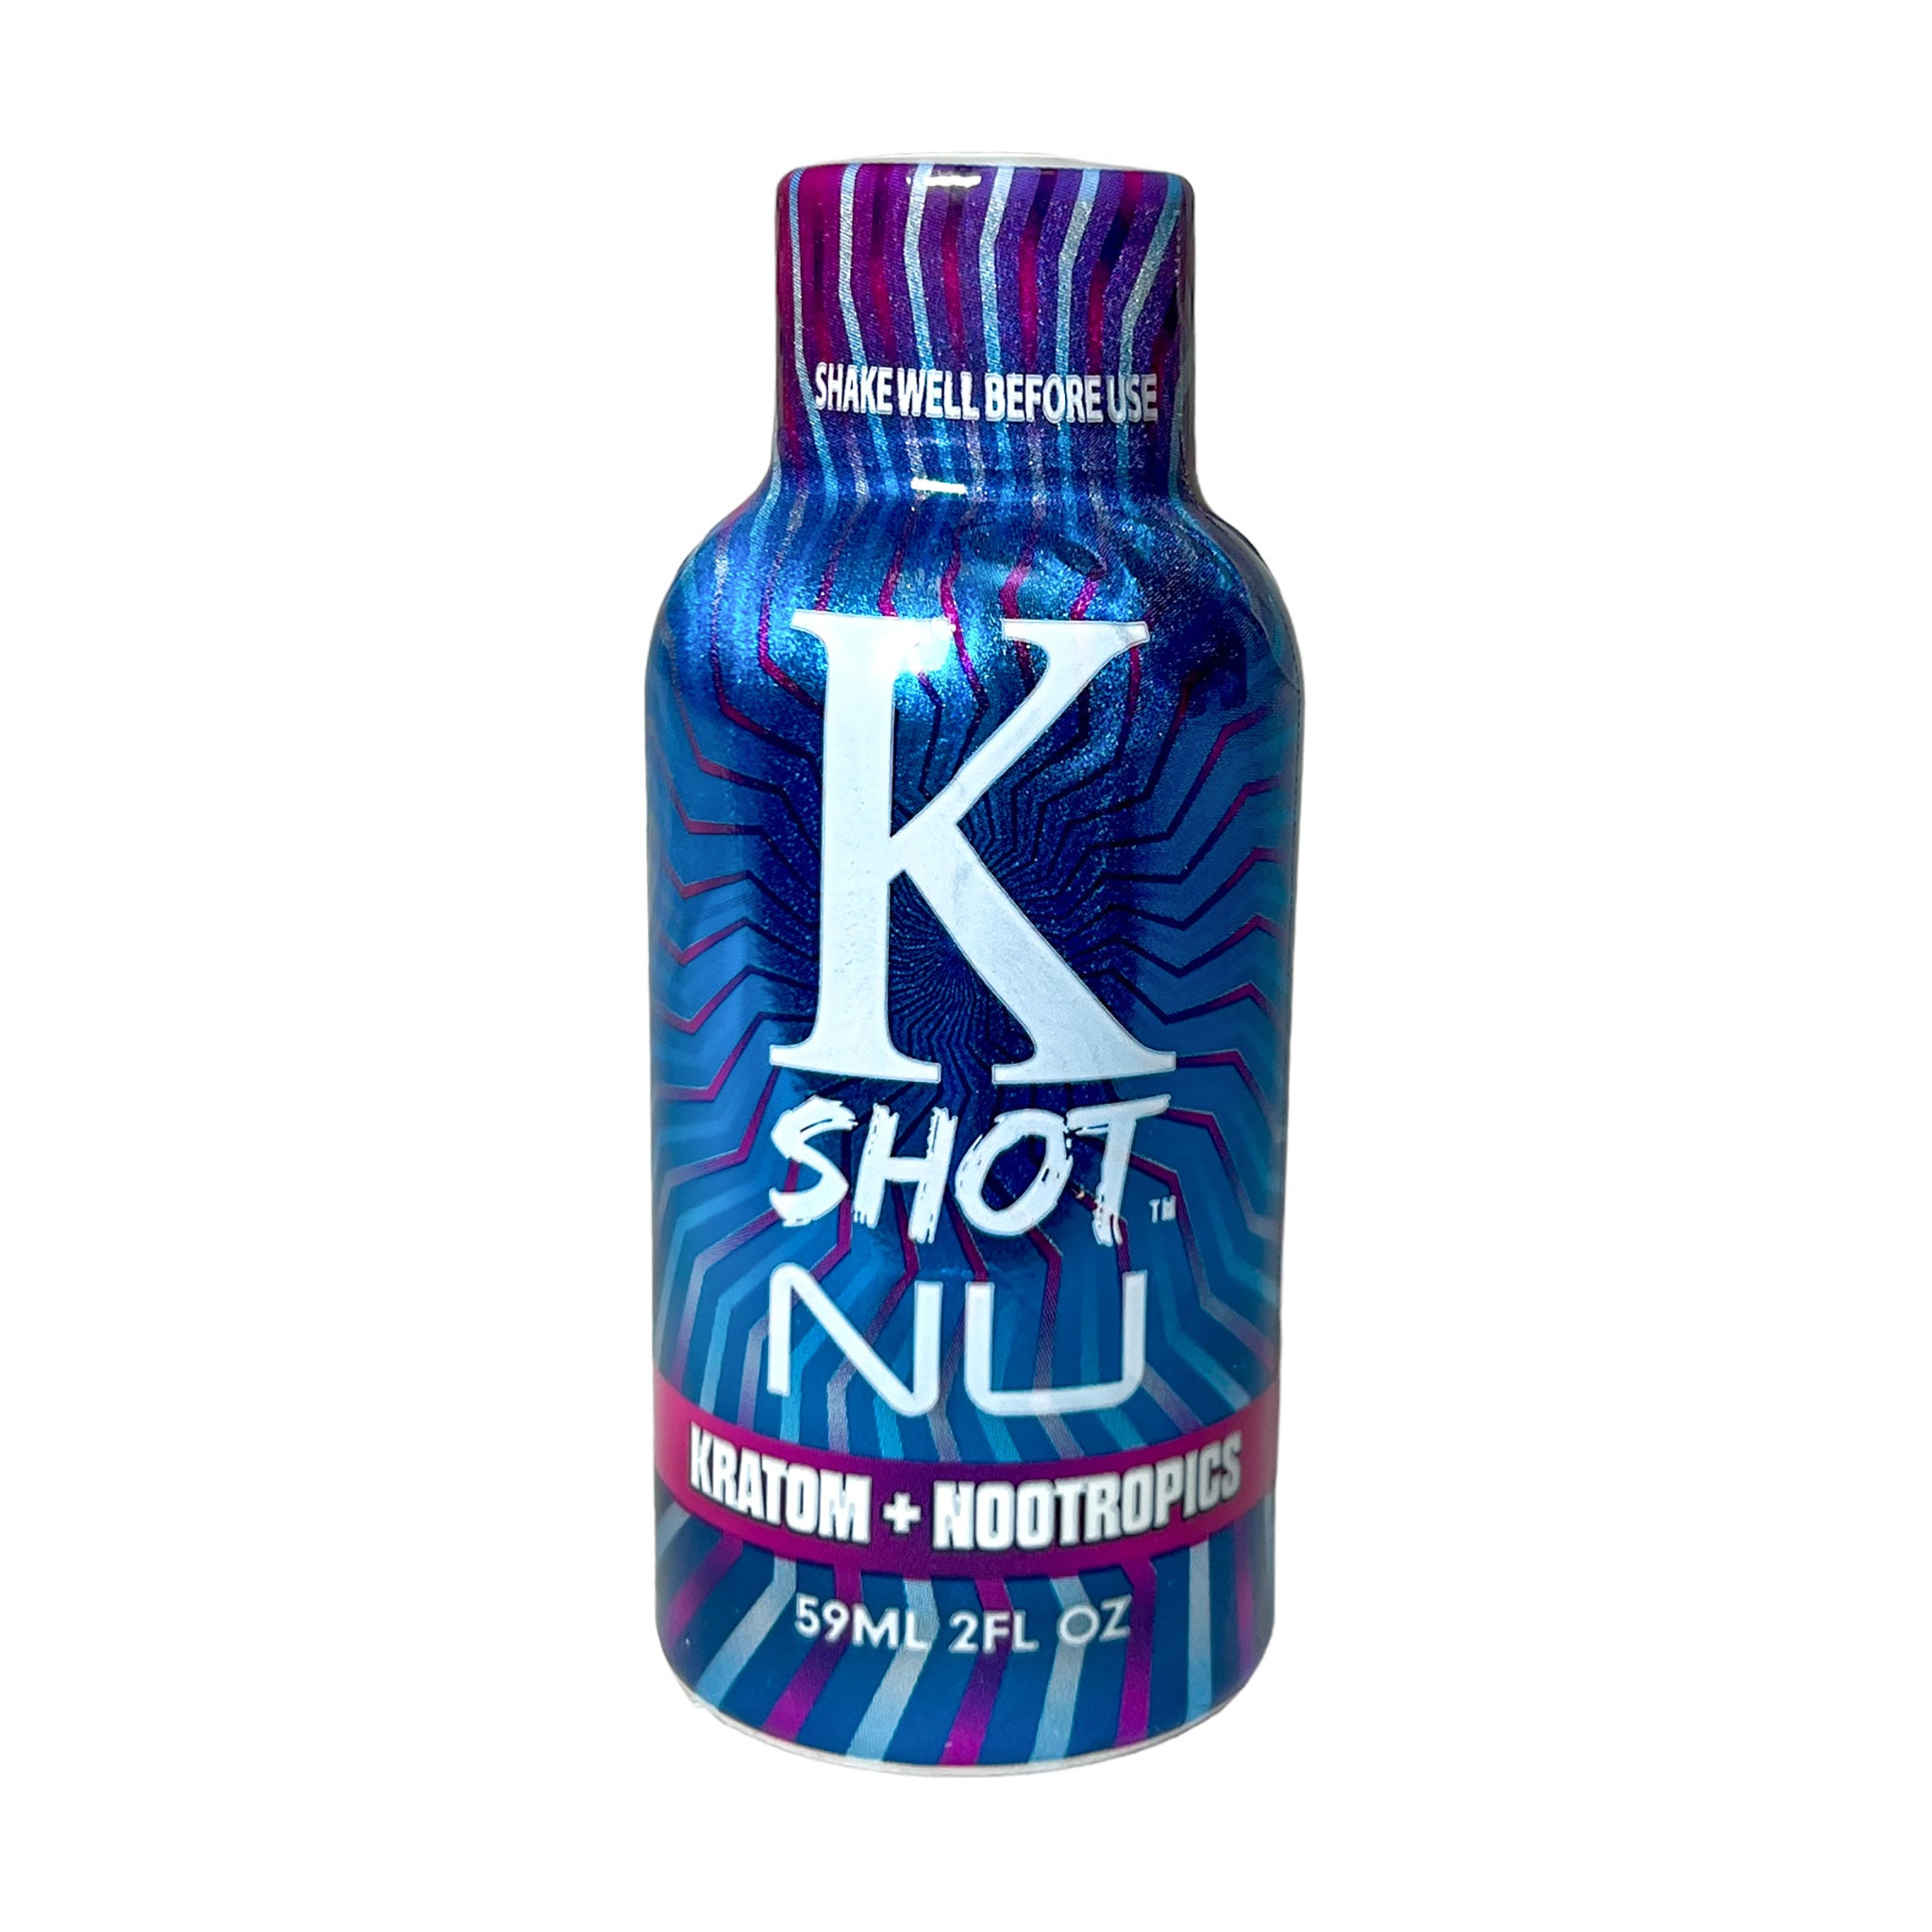 https://cdn11.bigcommerce.com/s-9rfkclyxvm/images/stencil/original/products/425/1277/K-Shot-Nu-_-Nootropics-Kratom-Energy-Shot-1-Bottle__31950.1680820230.jpg?c=1